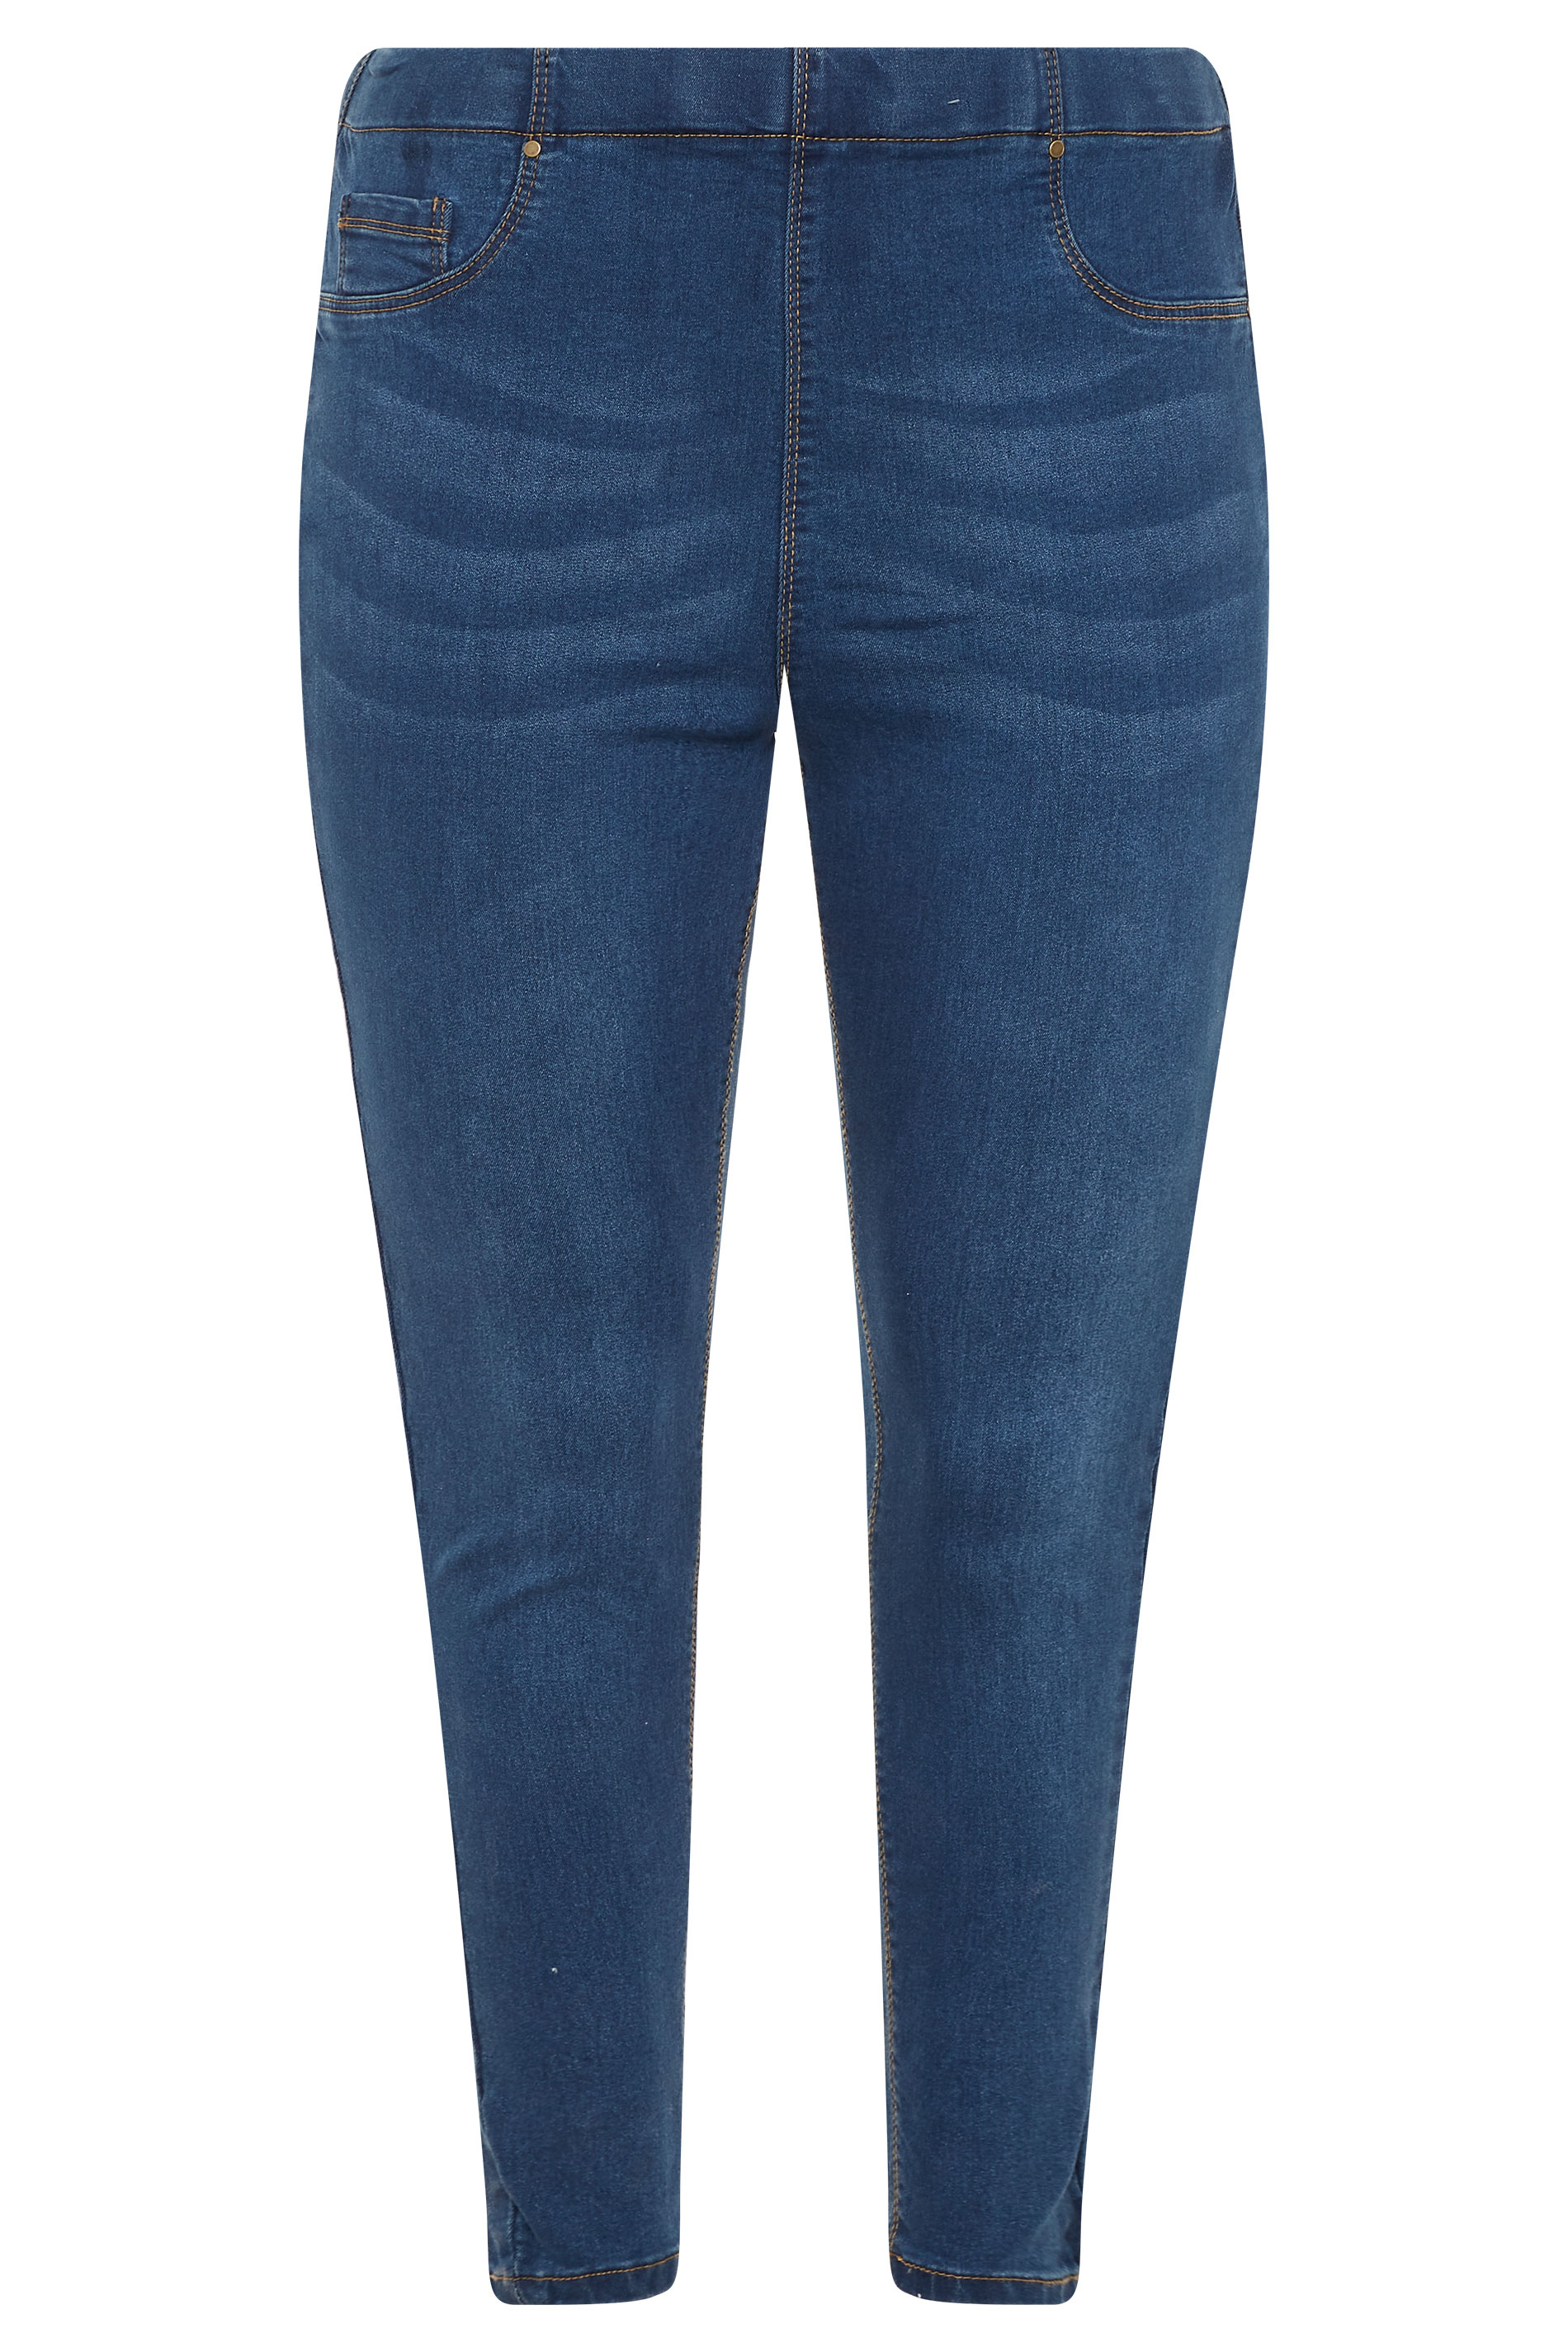 Next Girls Dark Blue Denim Stretch Skinny Jeggings Jeans Pants UK